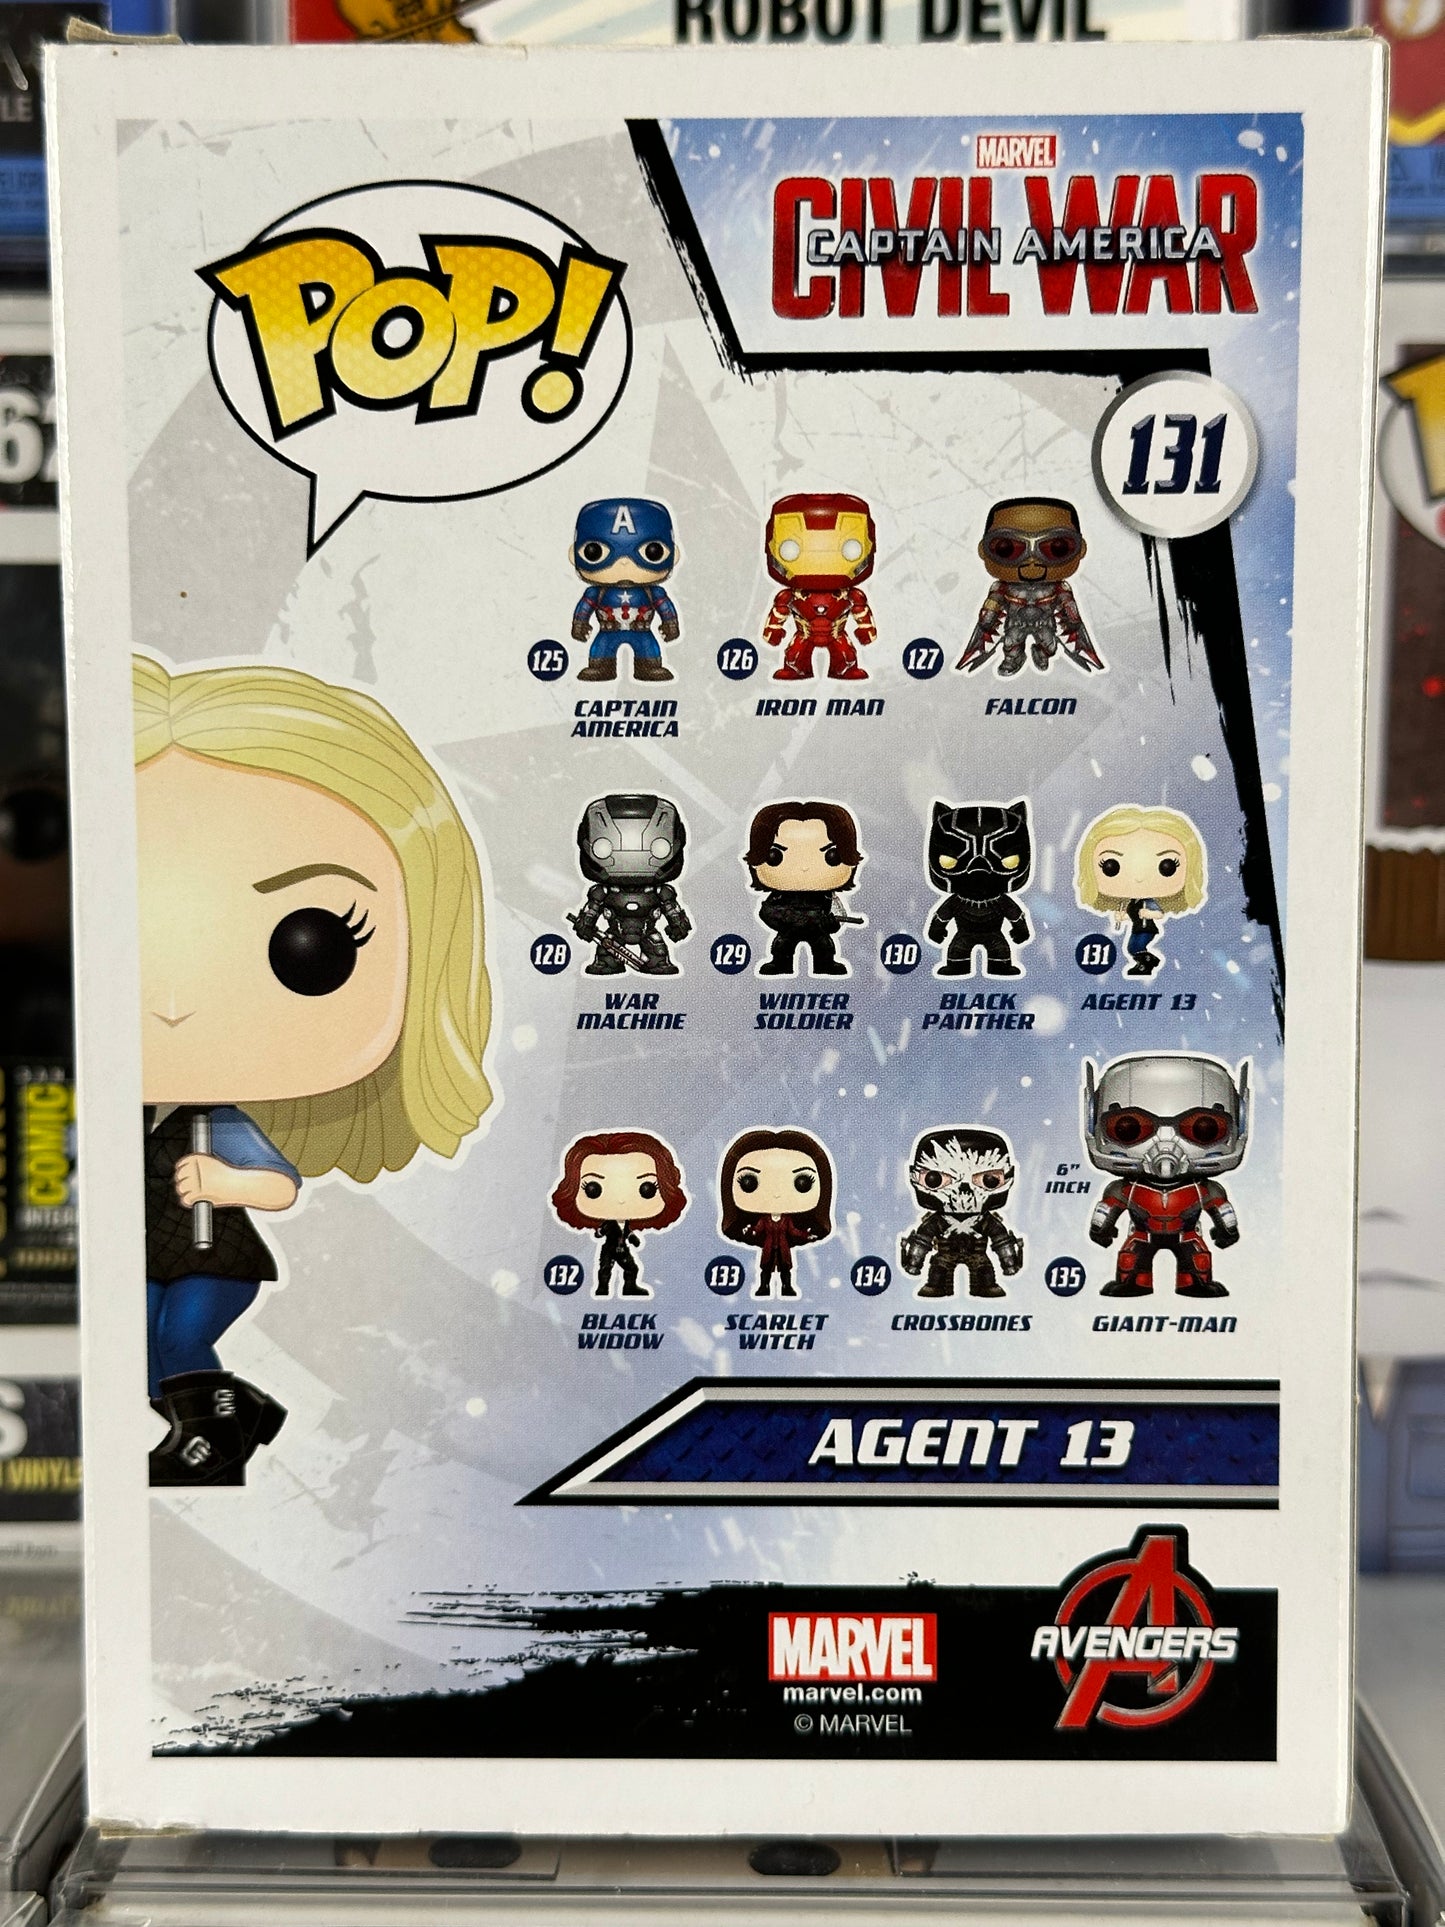 Marvel Captain America Civil War - Agent 13 (131) Vaulted